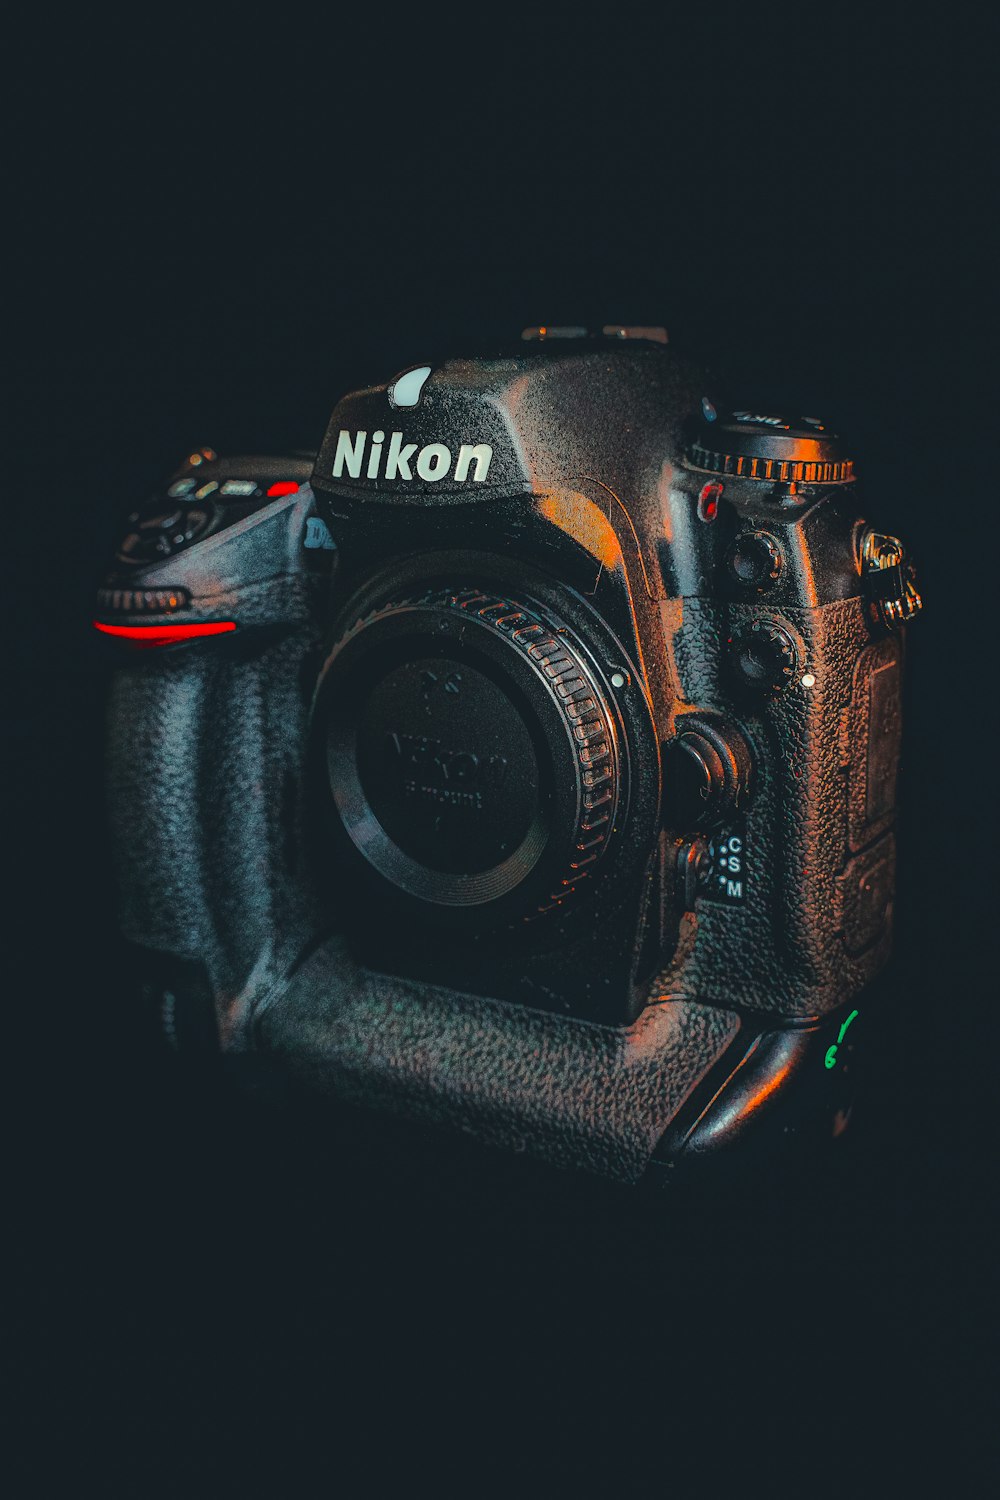 Cámara DSLR Nikon negra sobre superficie negra